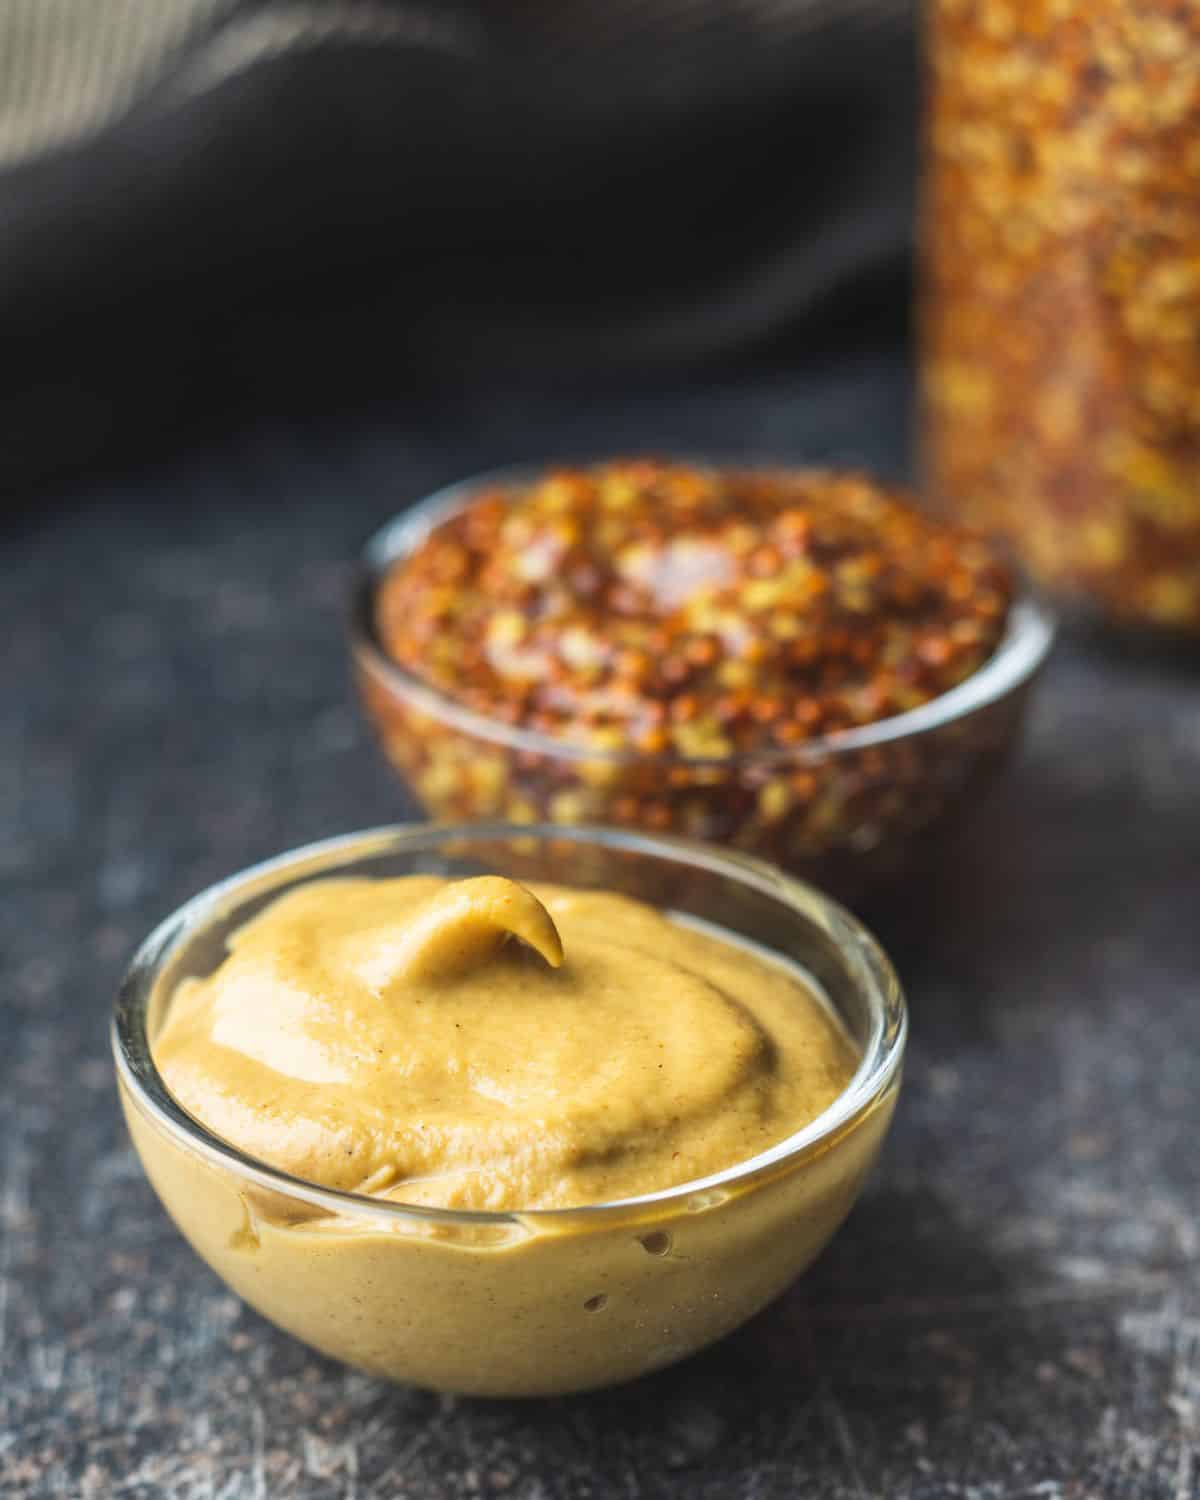 Dijon mustard and wholegrain mustard in glass bowls.